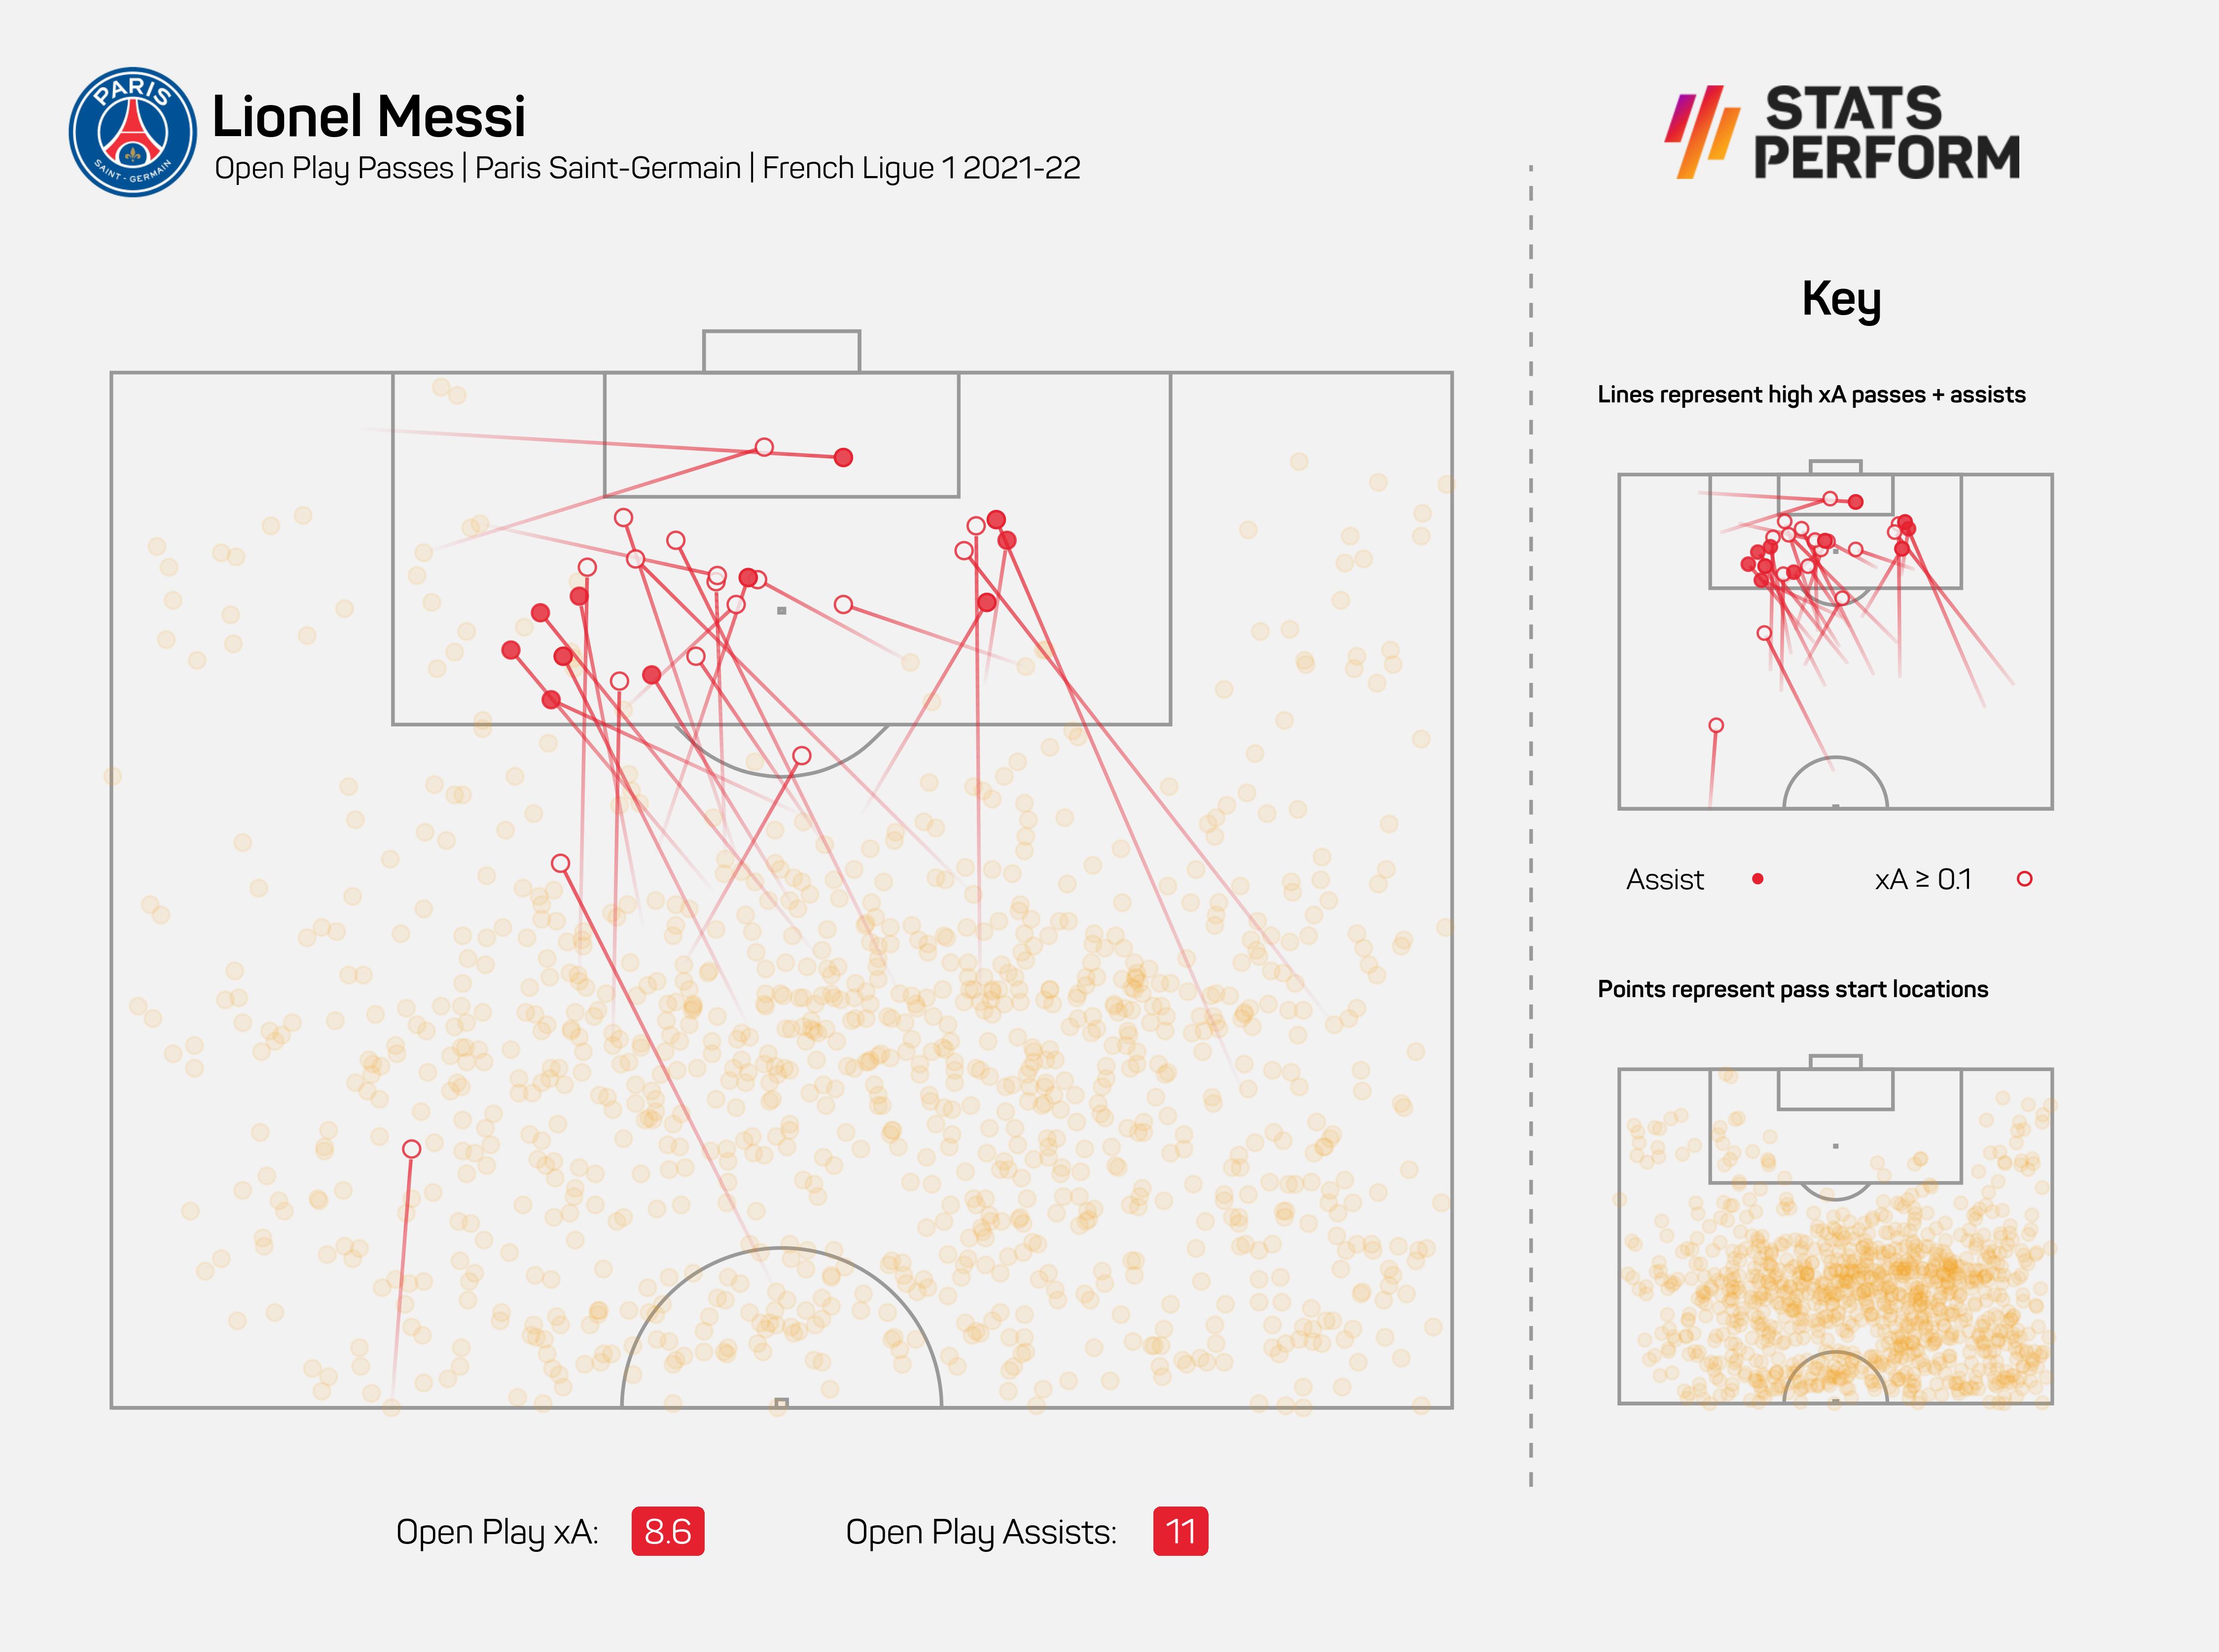 Lionel Messi assisted 14 league goals last season